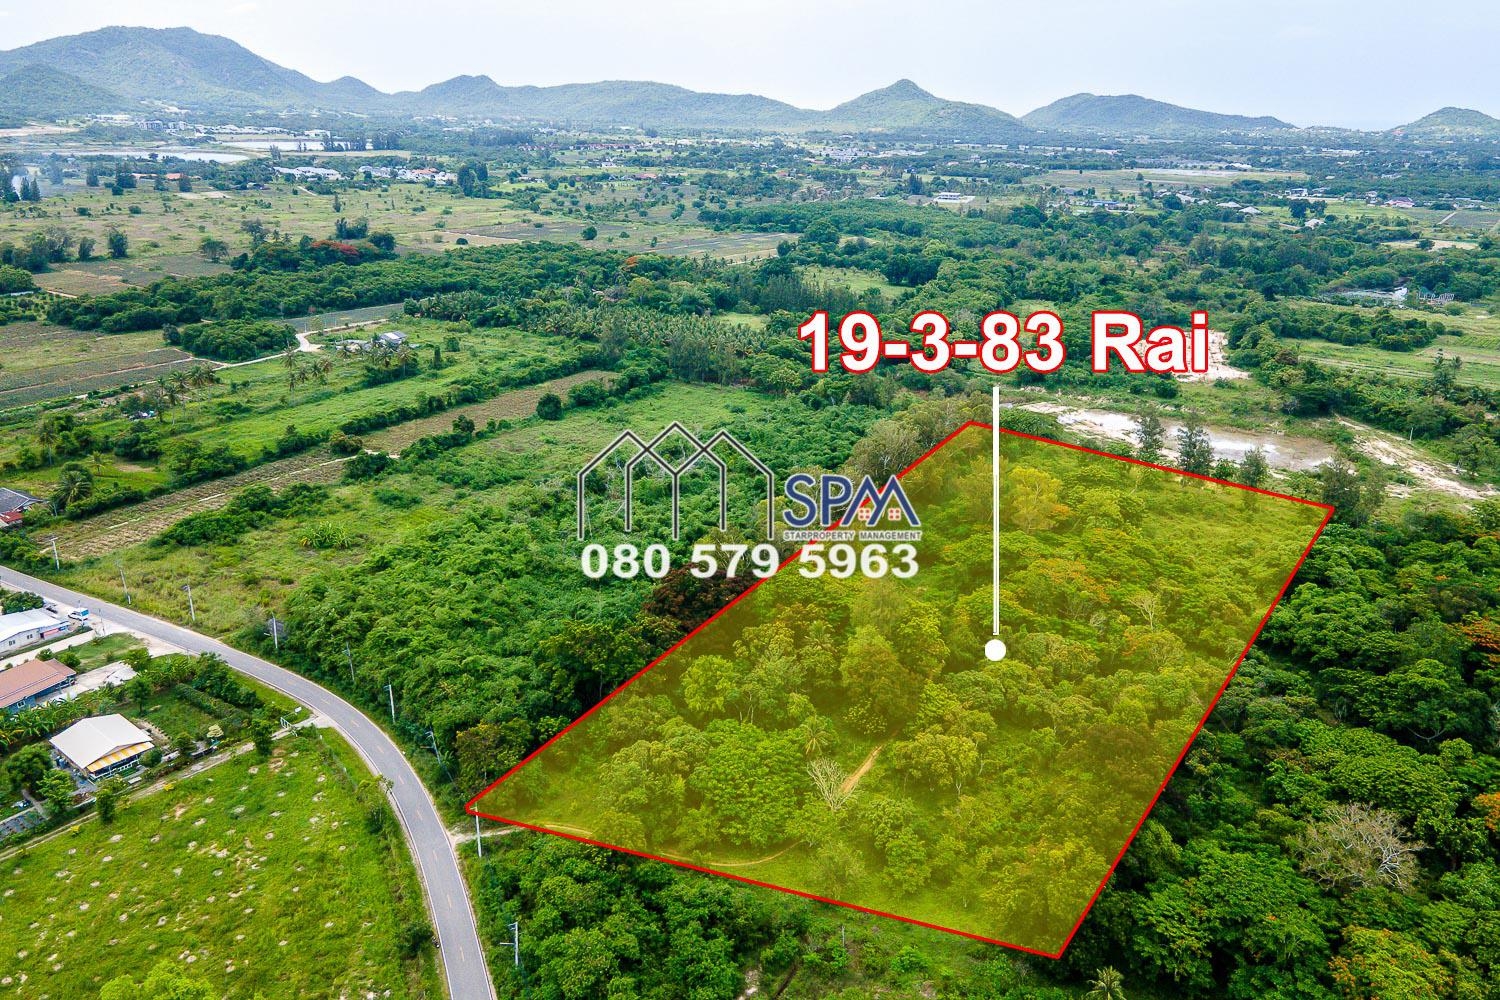 Land for sale near Black Mountain Golf Course, Land Area 19 Rai 3 Ngan 83 sq.wah (31932sq.m) Total Price 21 Million Baht